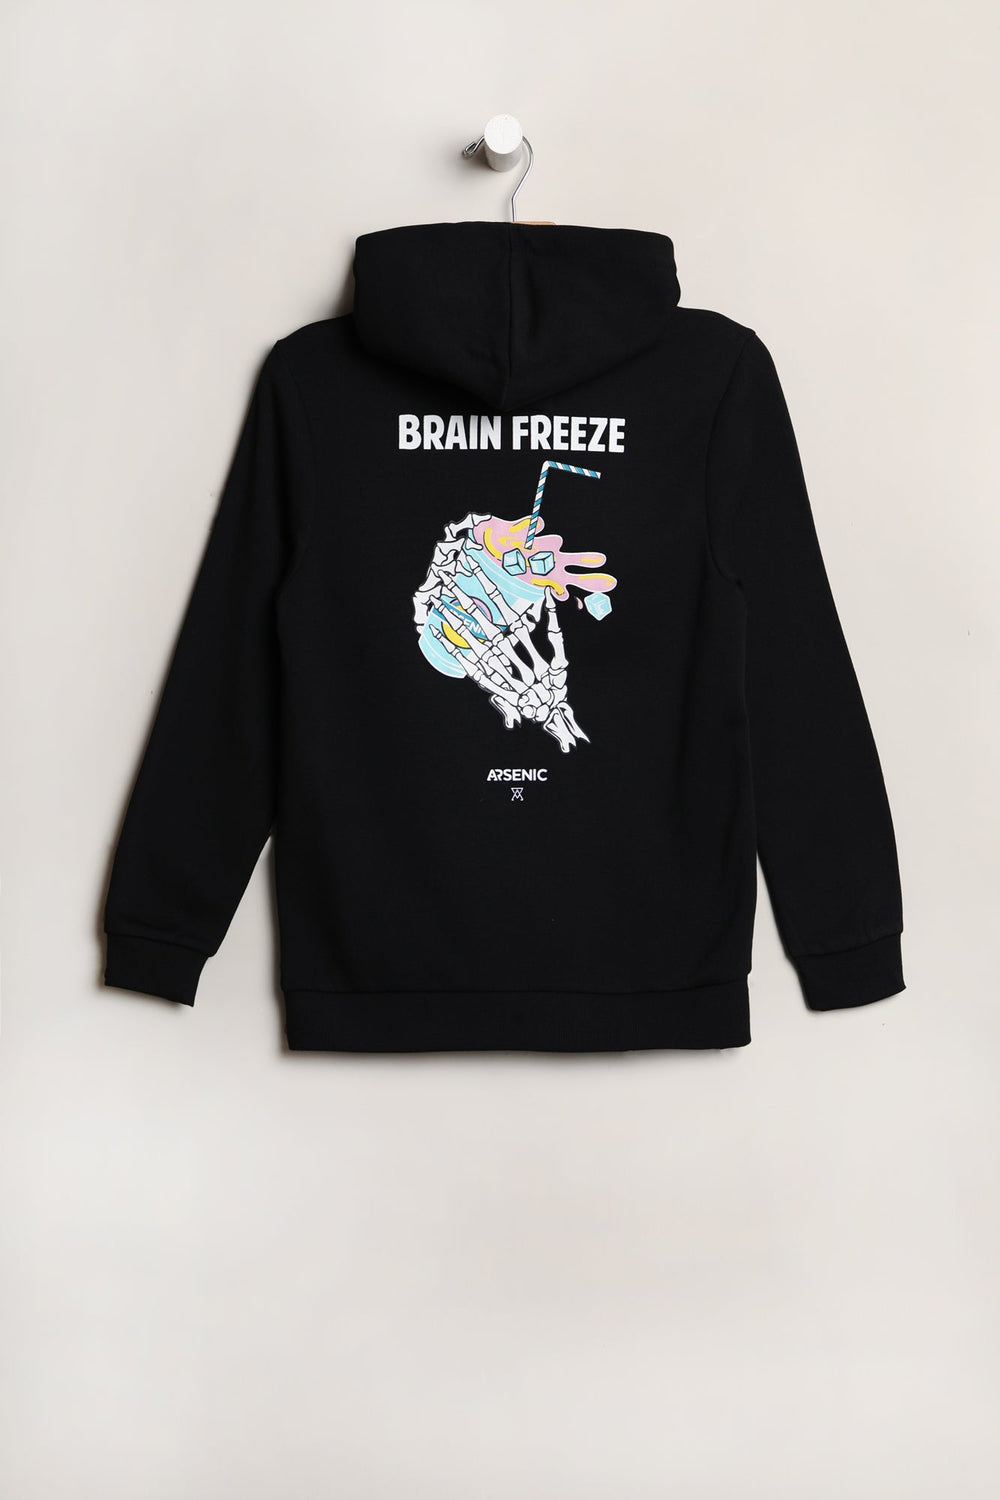 Arsenic Youth Brain Freeze Hoodie Arsenic Youth Brain Freeze Hoodie